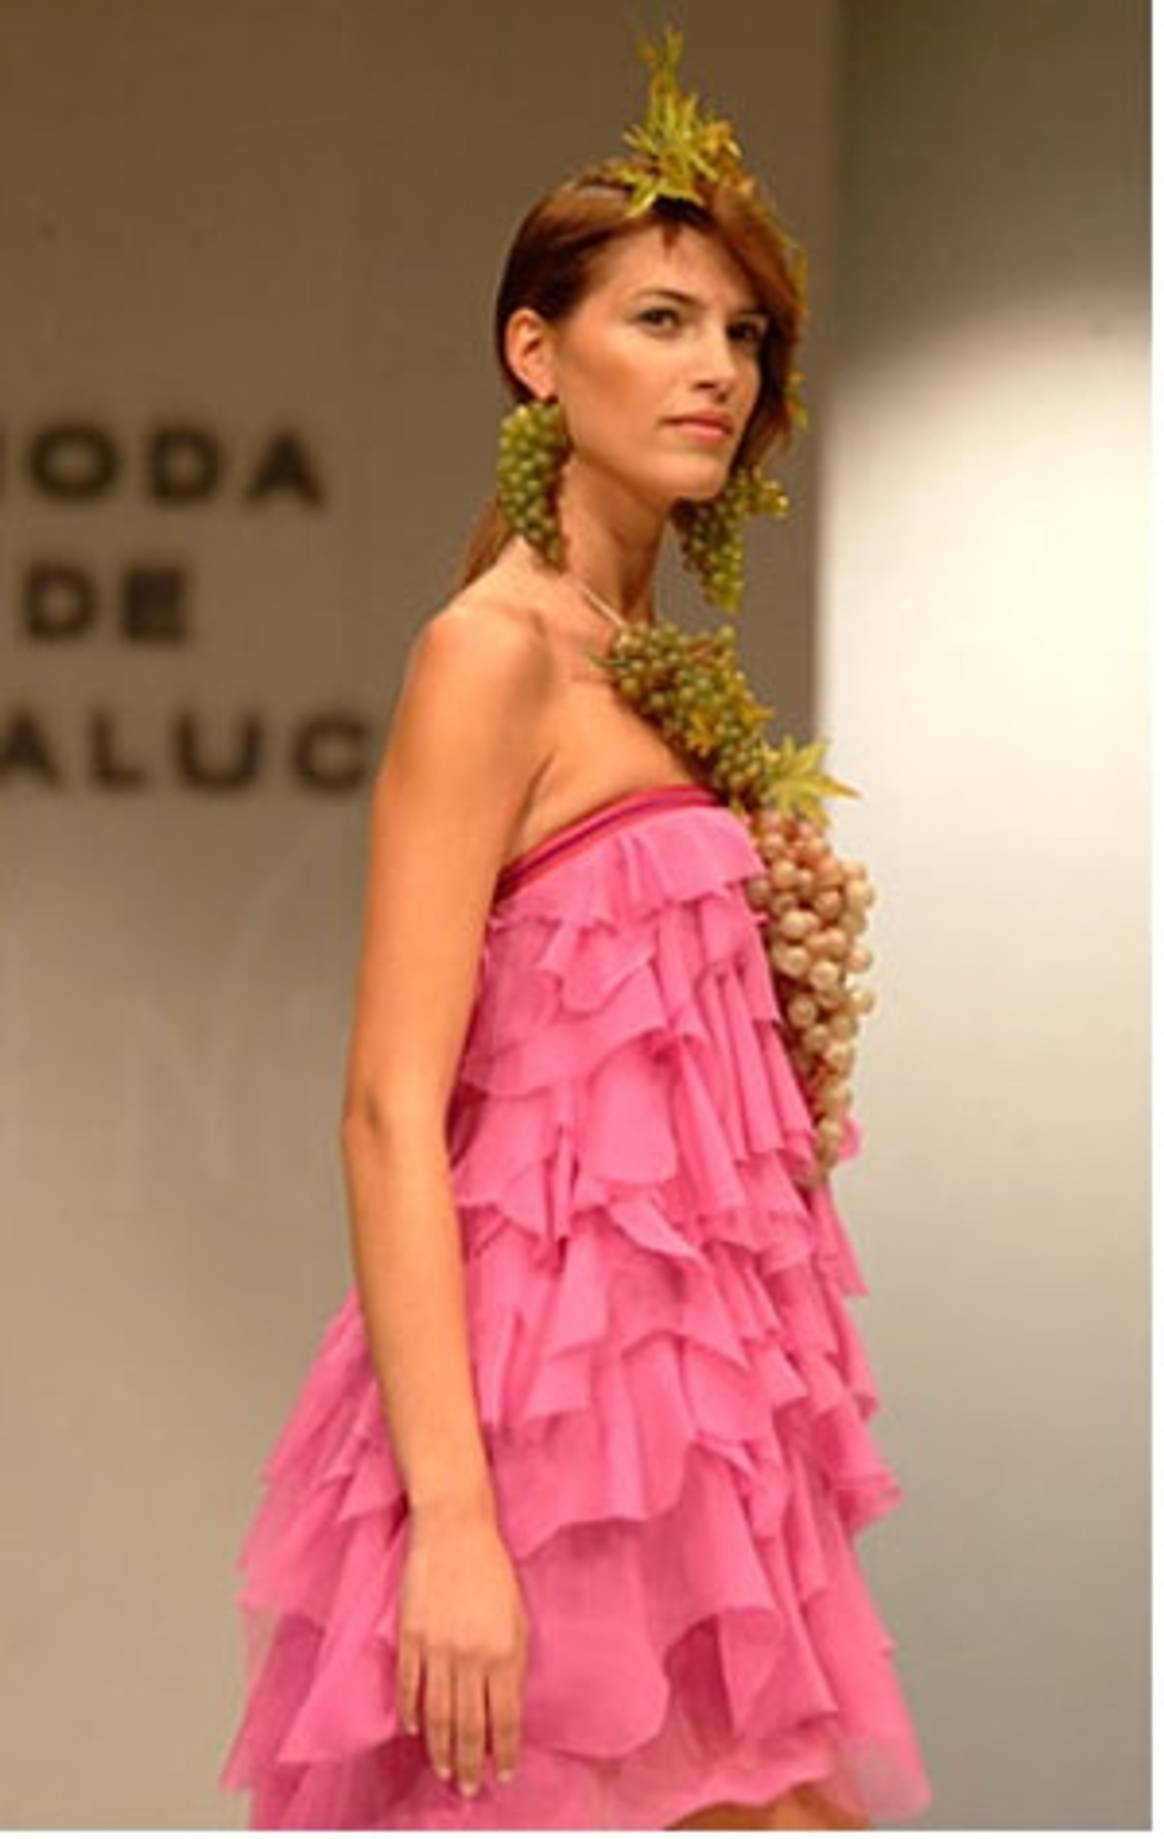 Andalucia se viste de moda